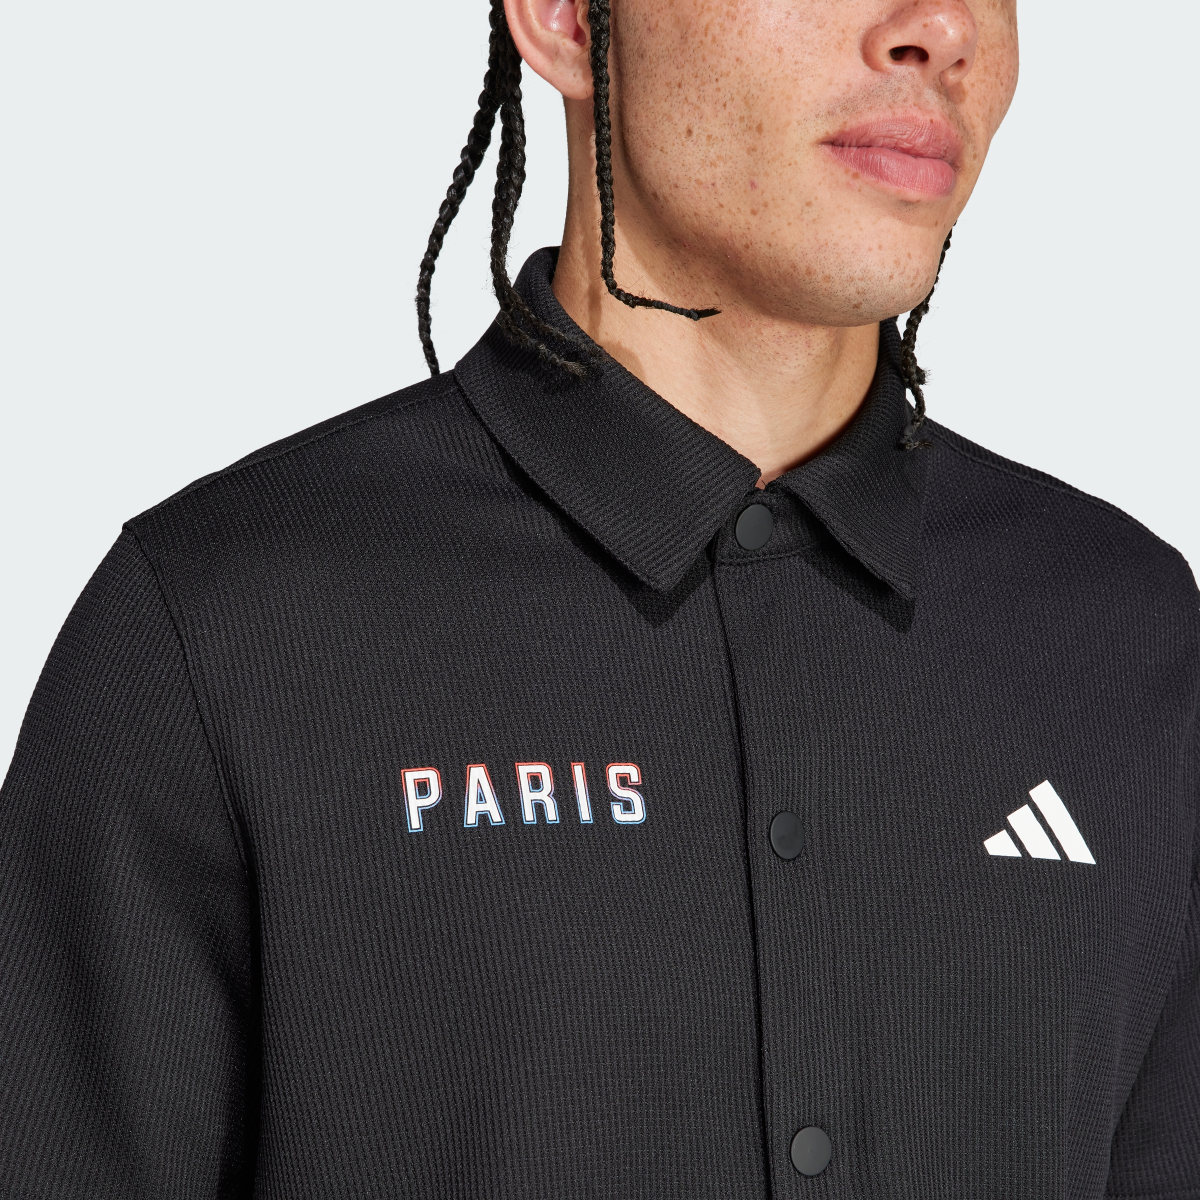 Adidas Paris Basketball Warm-Up Shooter AEROREADY Shirt. 6